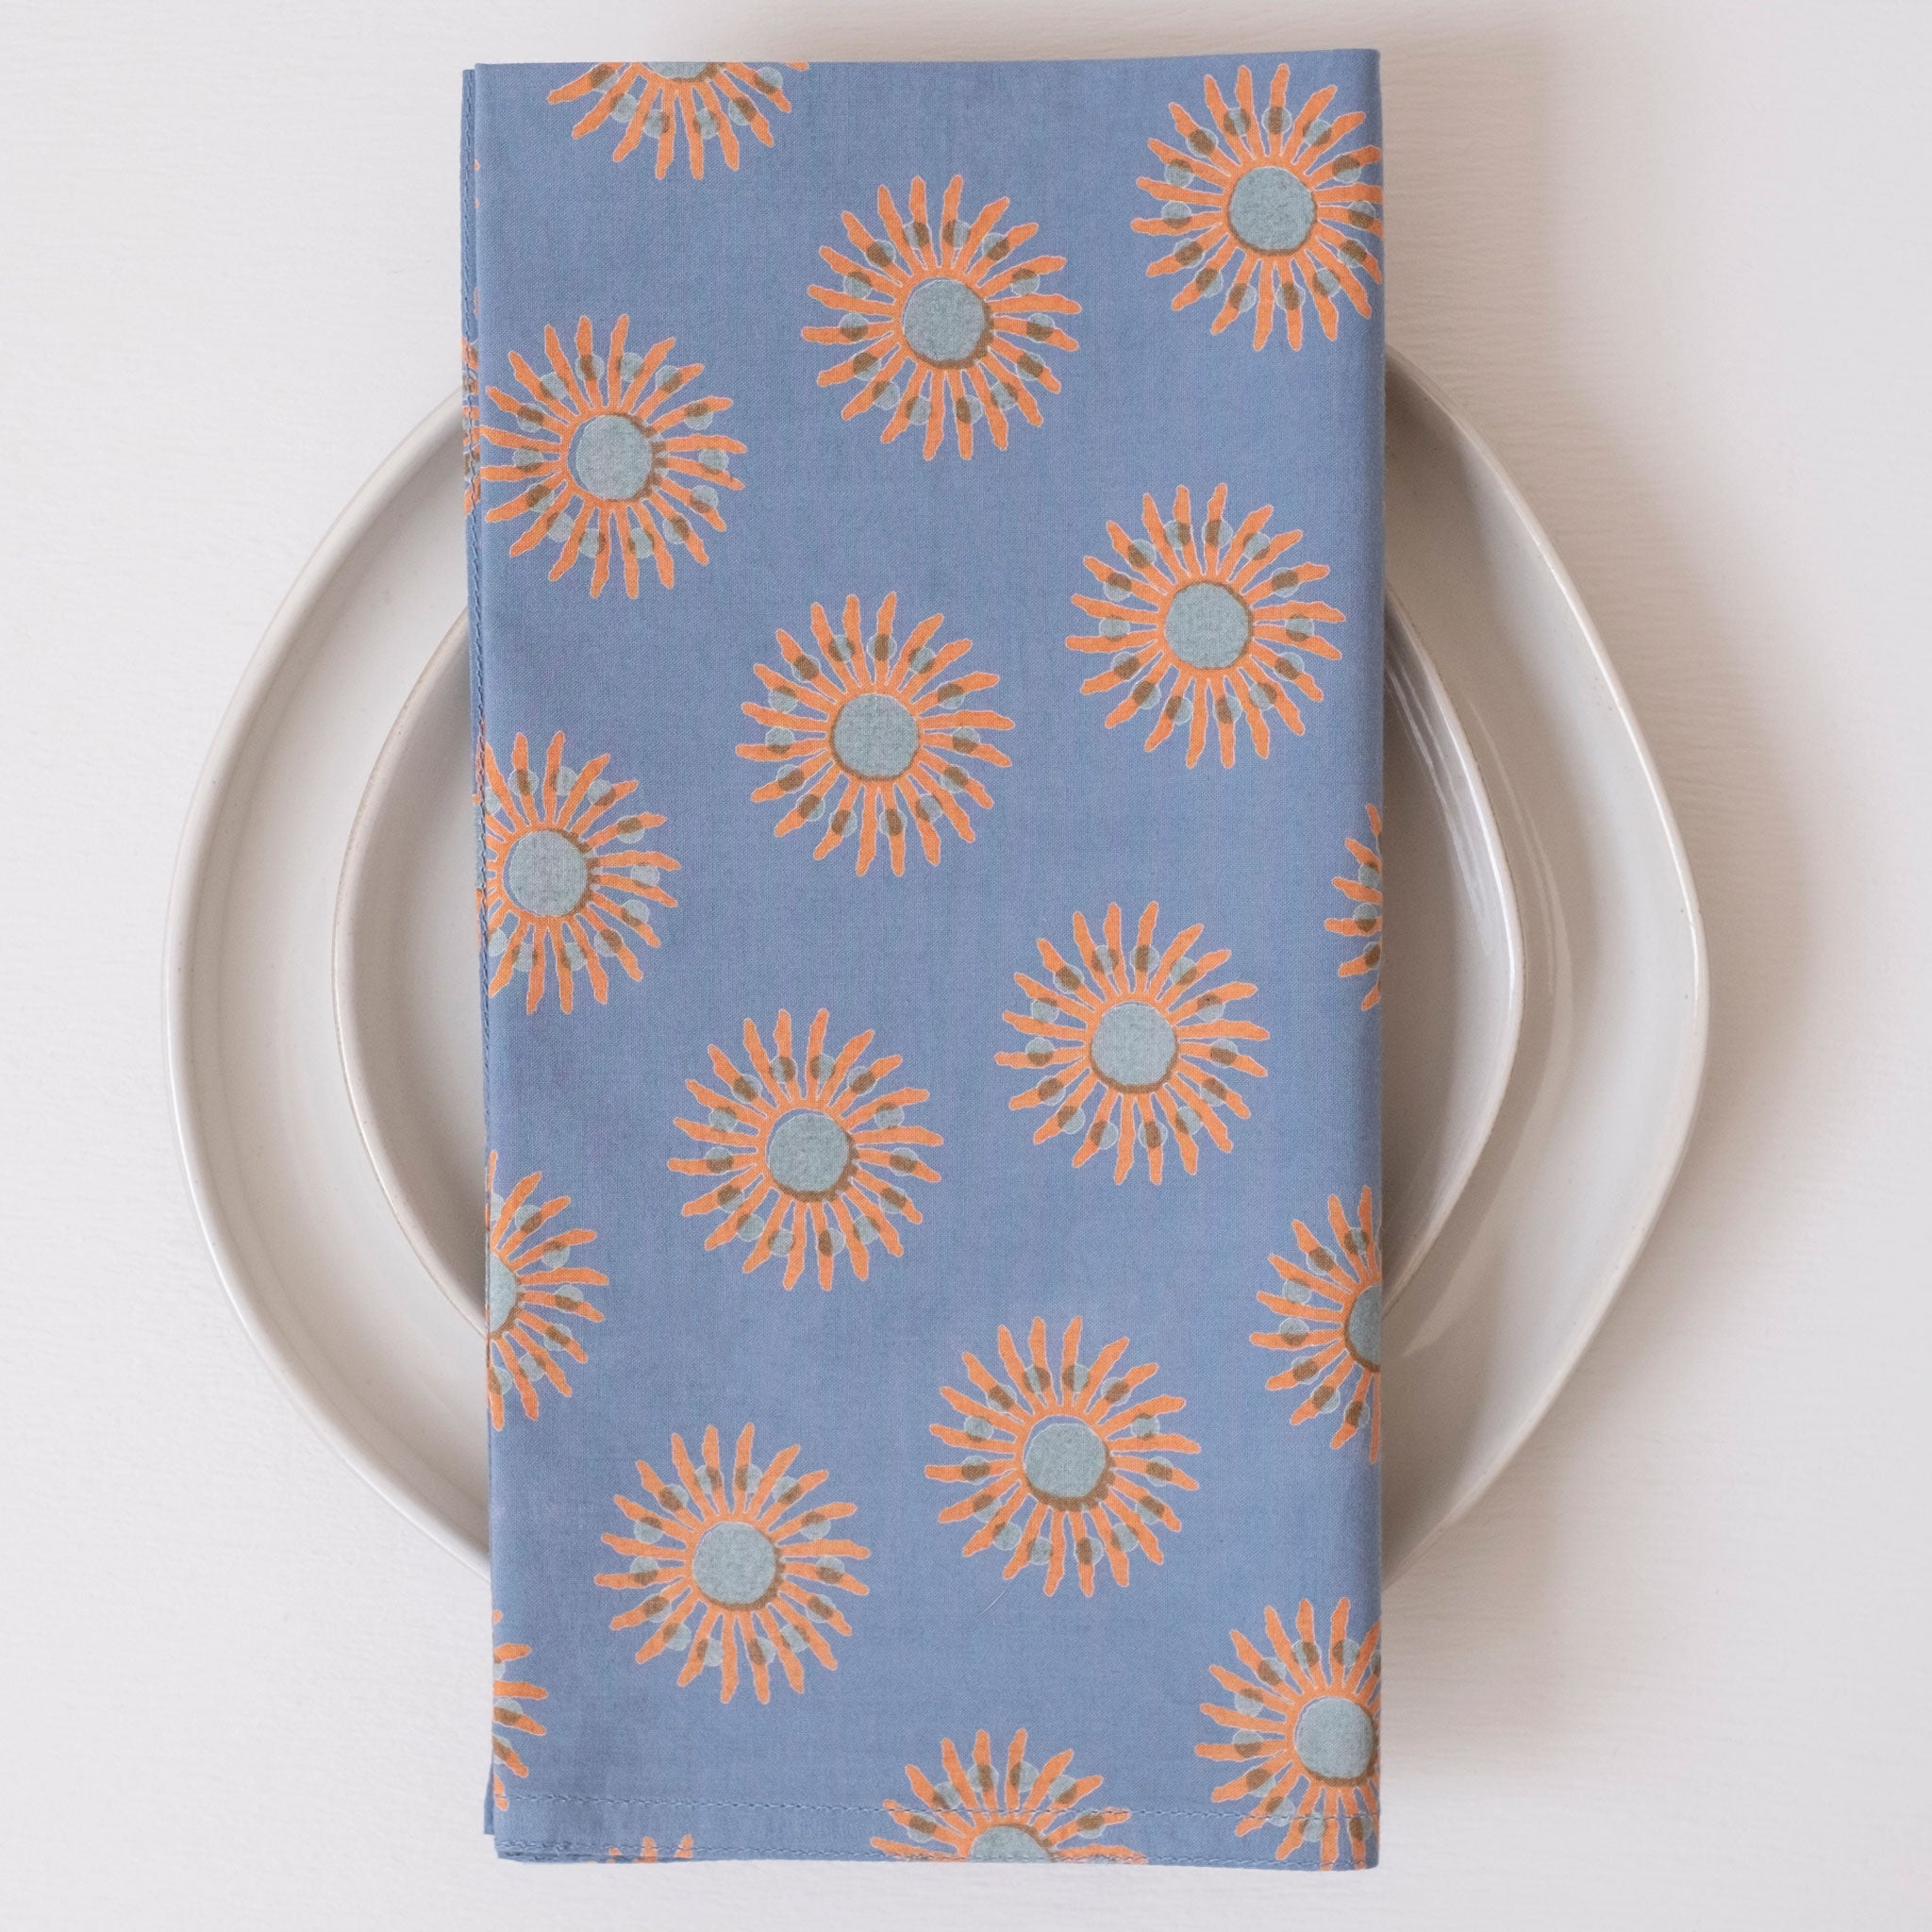 Sunflower Blue Block Printed Napkins - set of 4